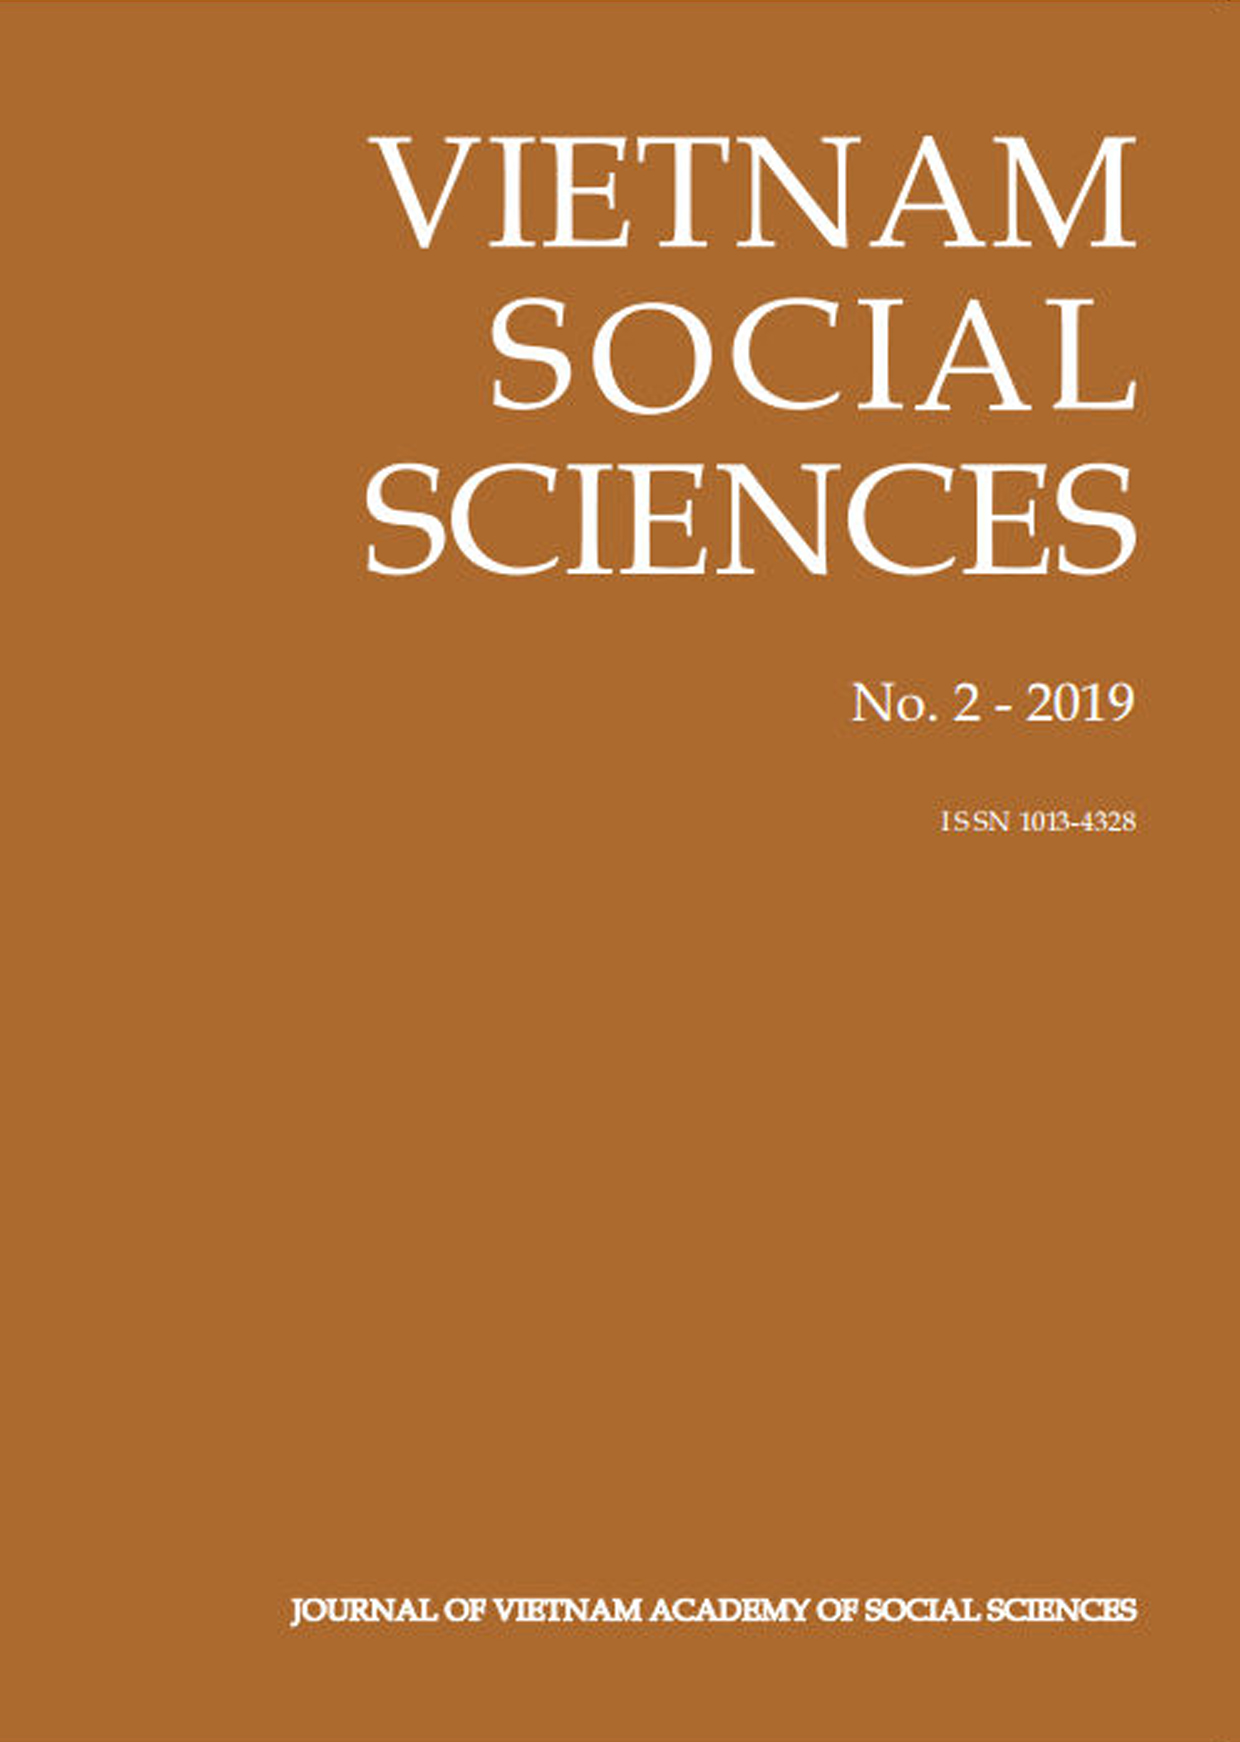 Vietnam Social Sciences. No. 2 - 2019 